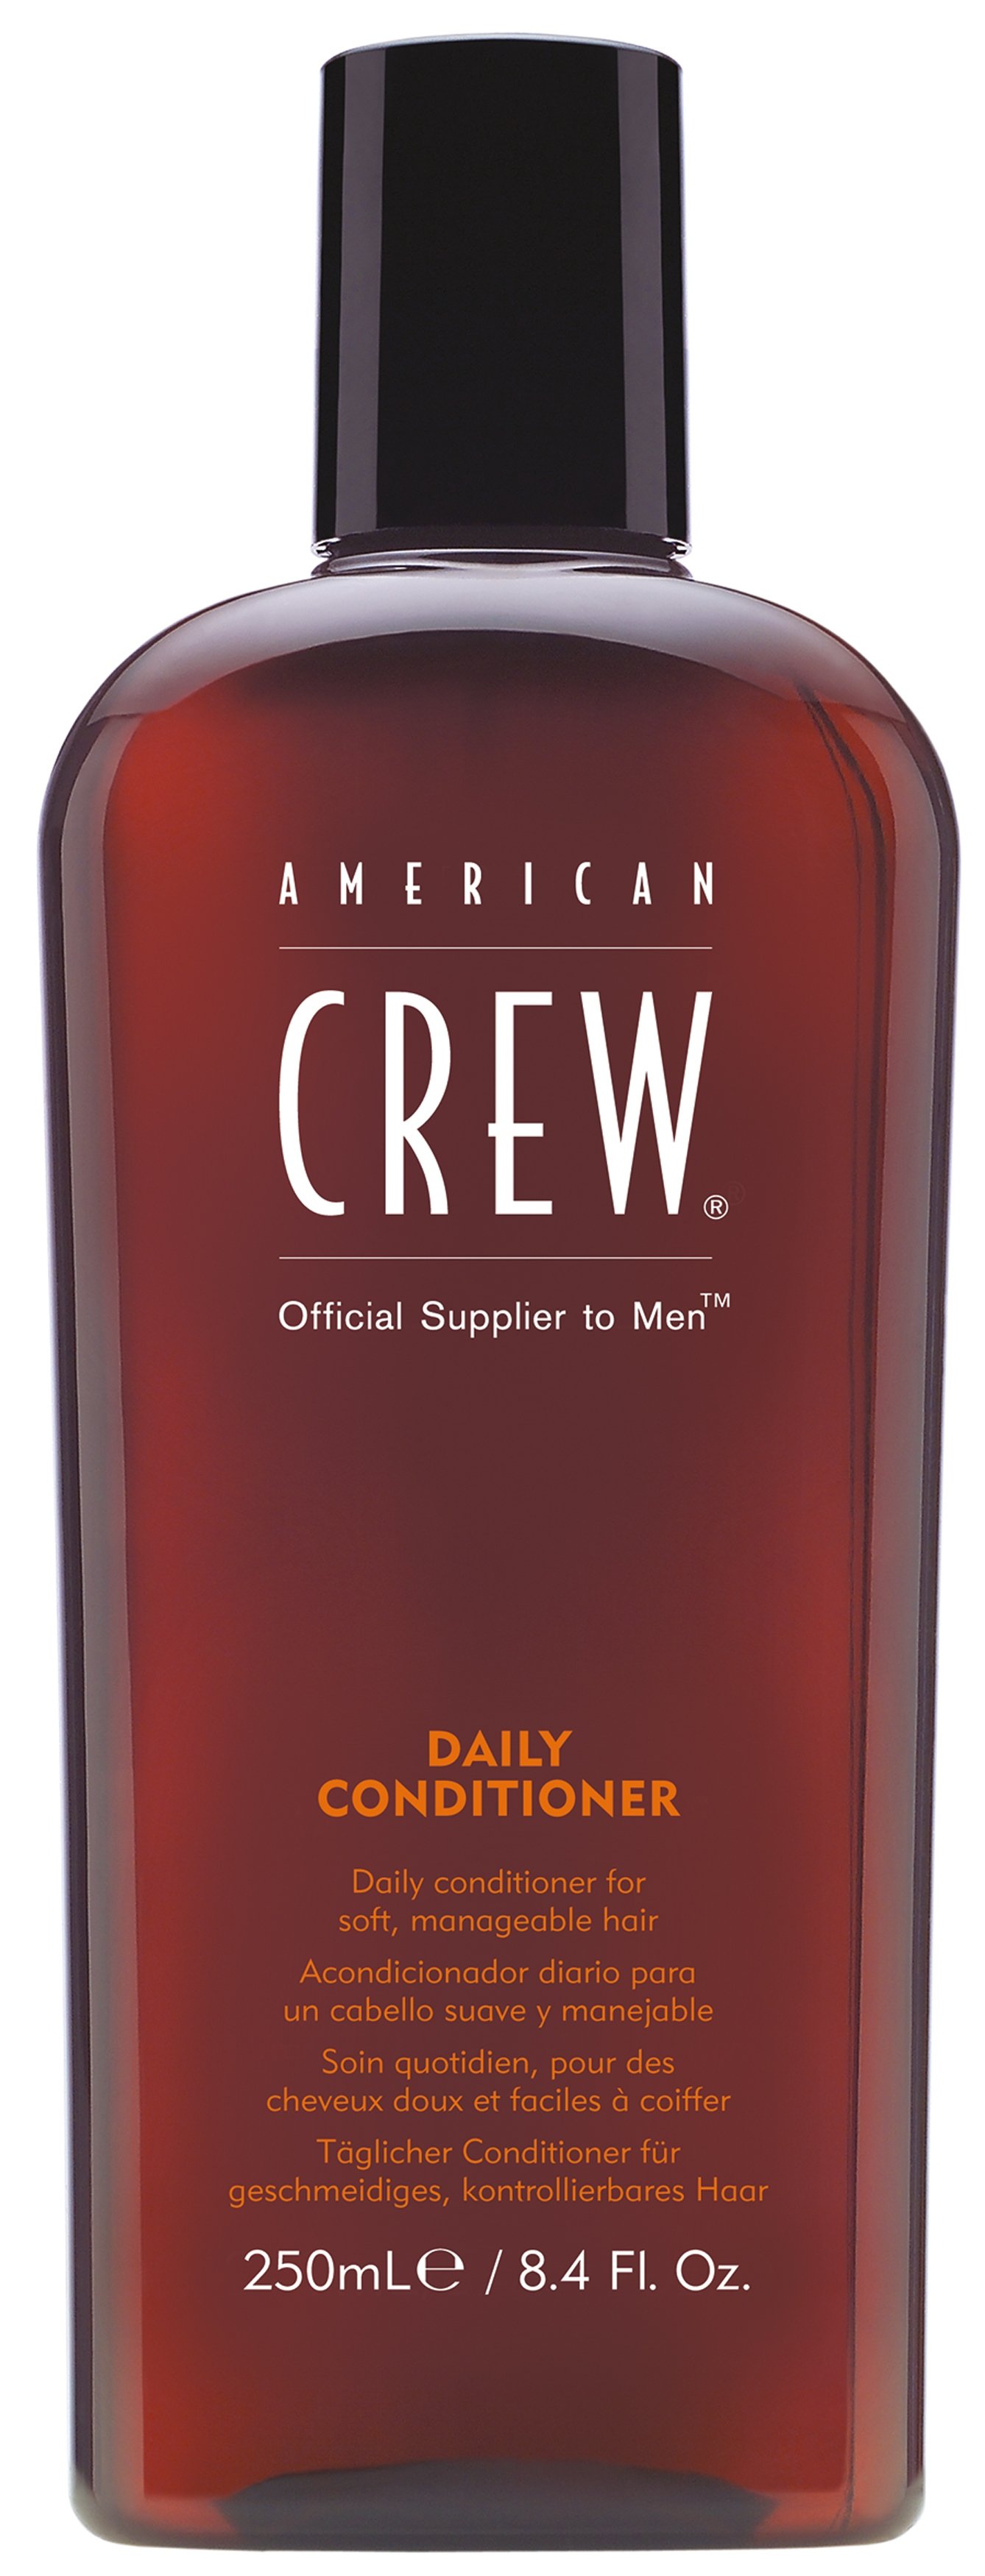 Мужские кондиционеры для волос:  AMERICAN CREW -  Увлажняющий кондиционер для ежедневного ухода Daily (250 мл) American Crew (250 мл)